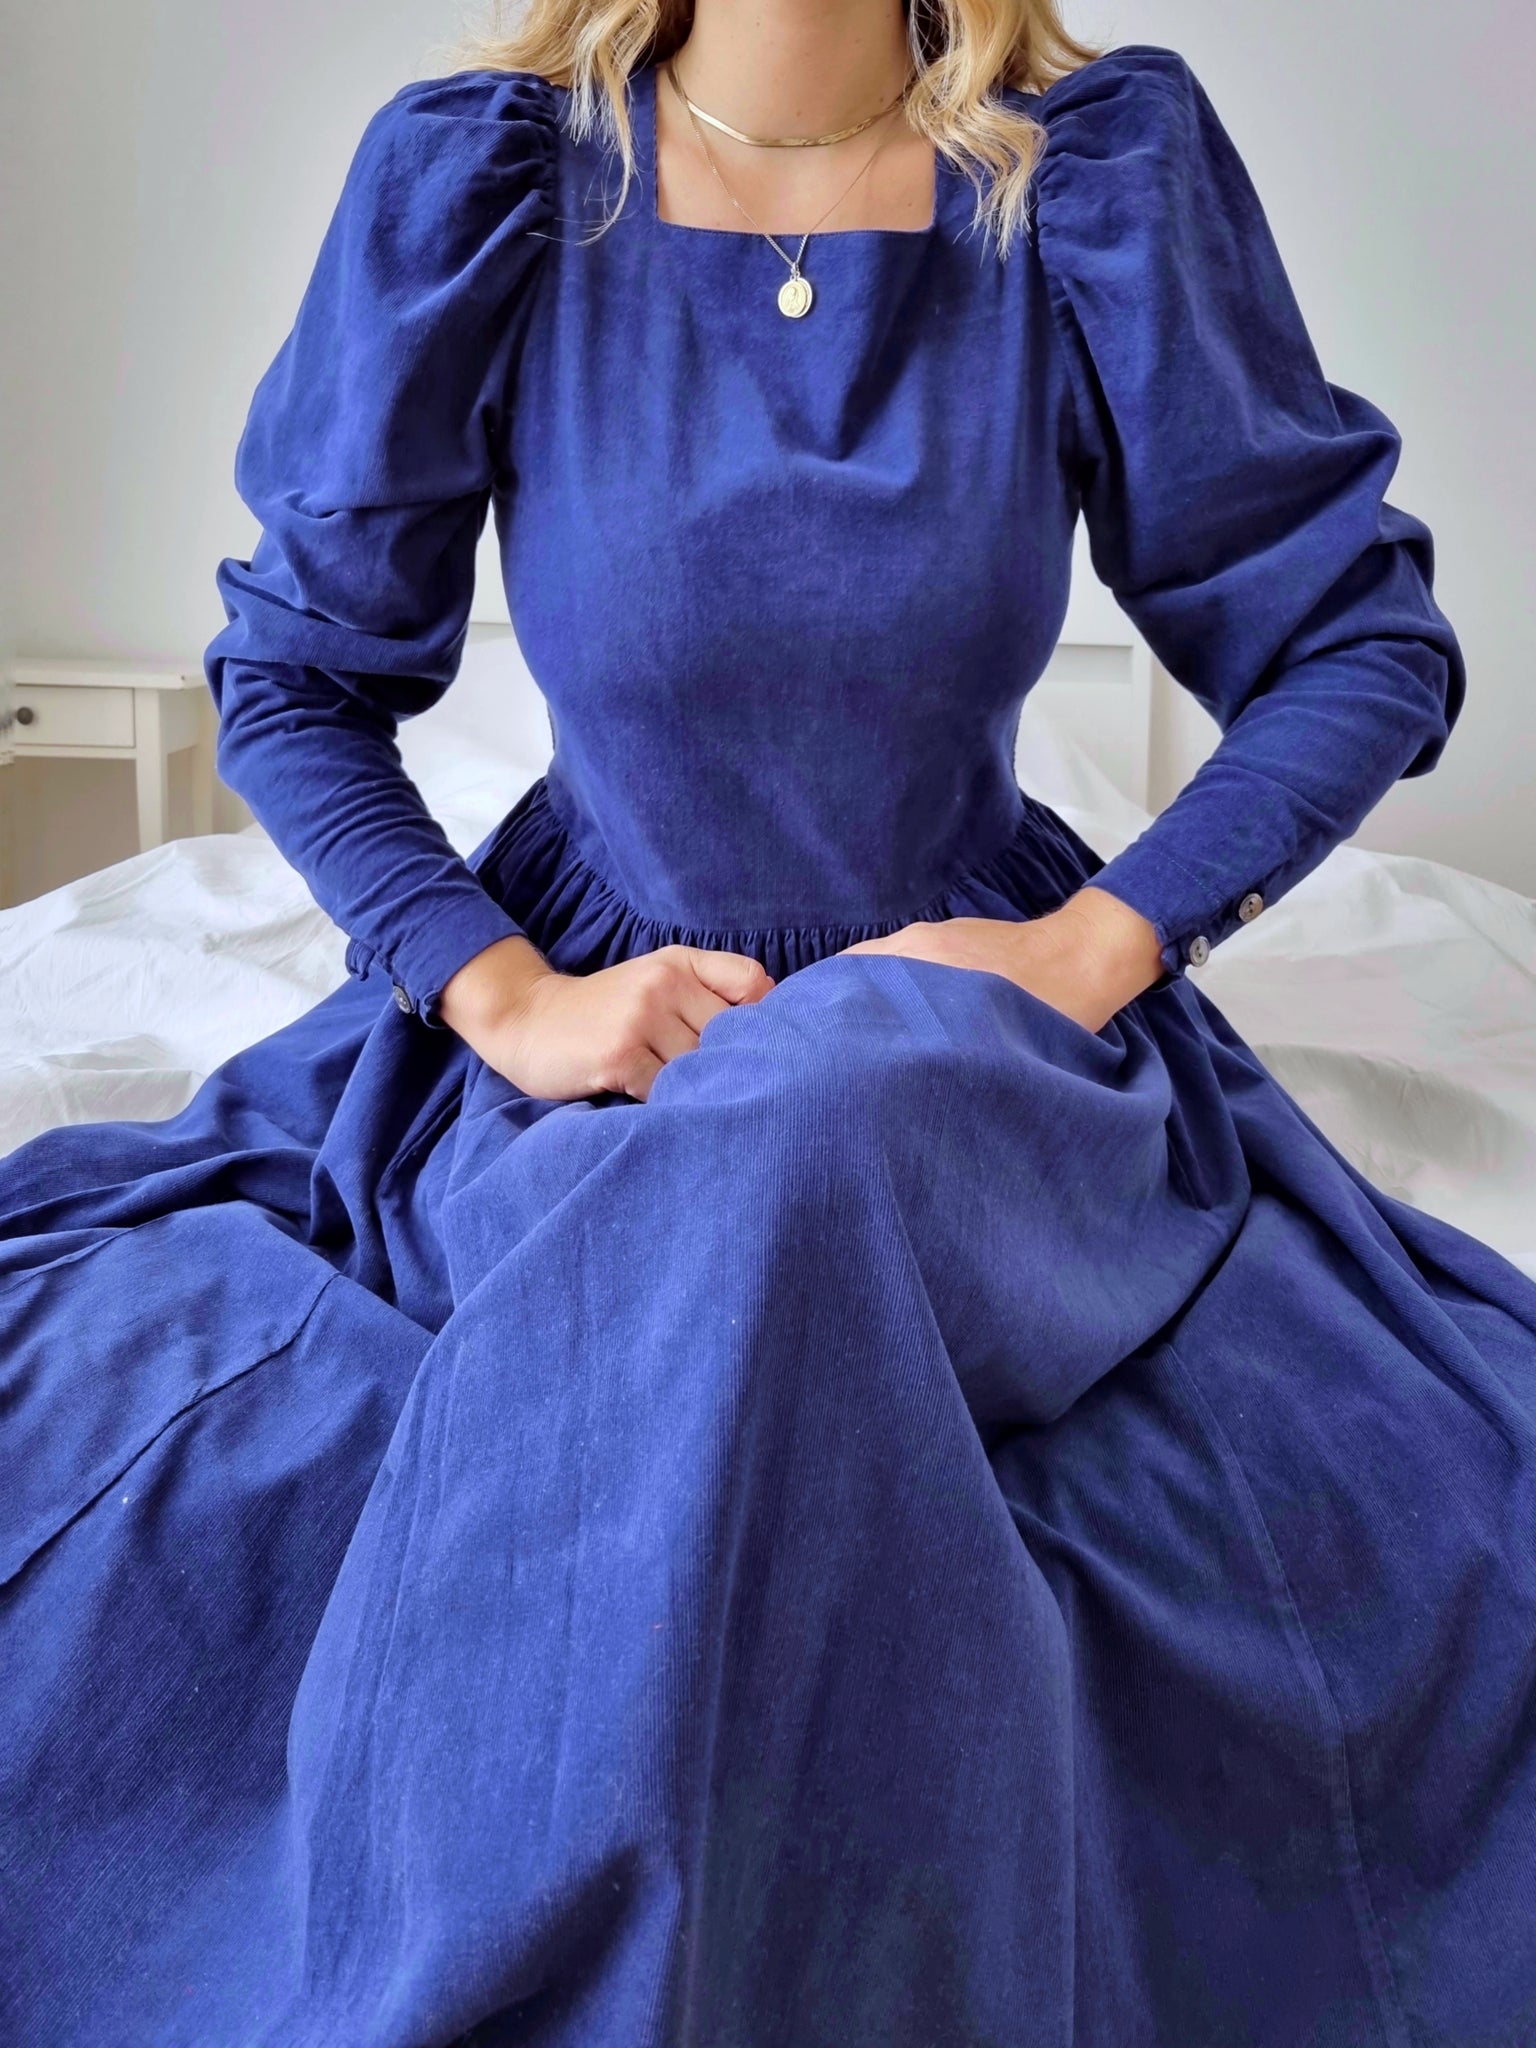 Vintage Laura Ashley Corduroy Dress